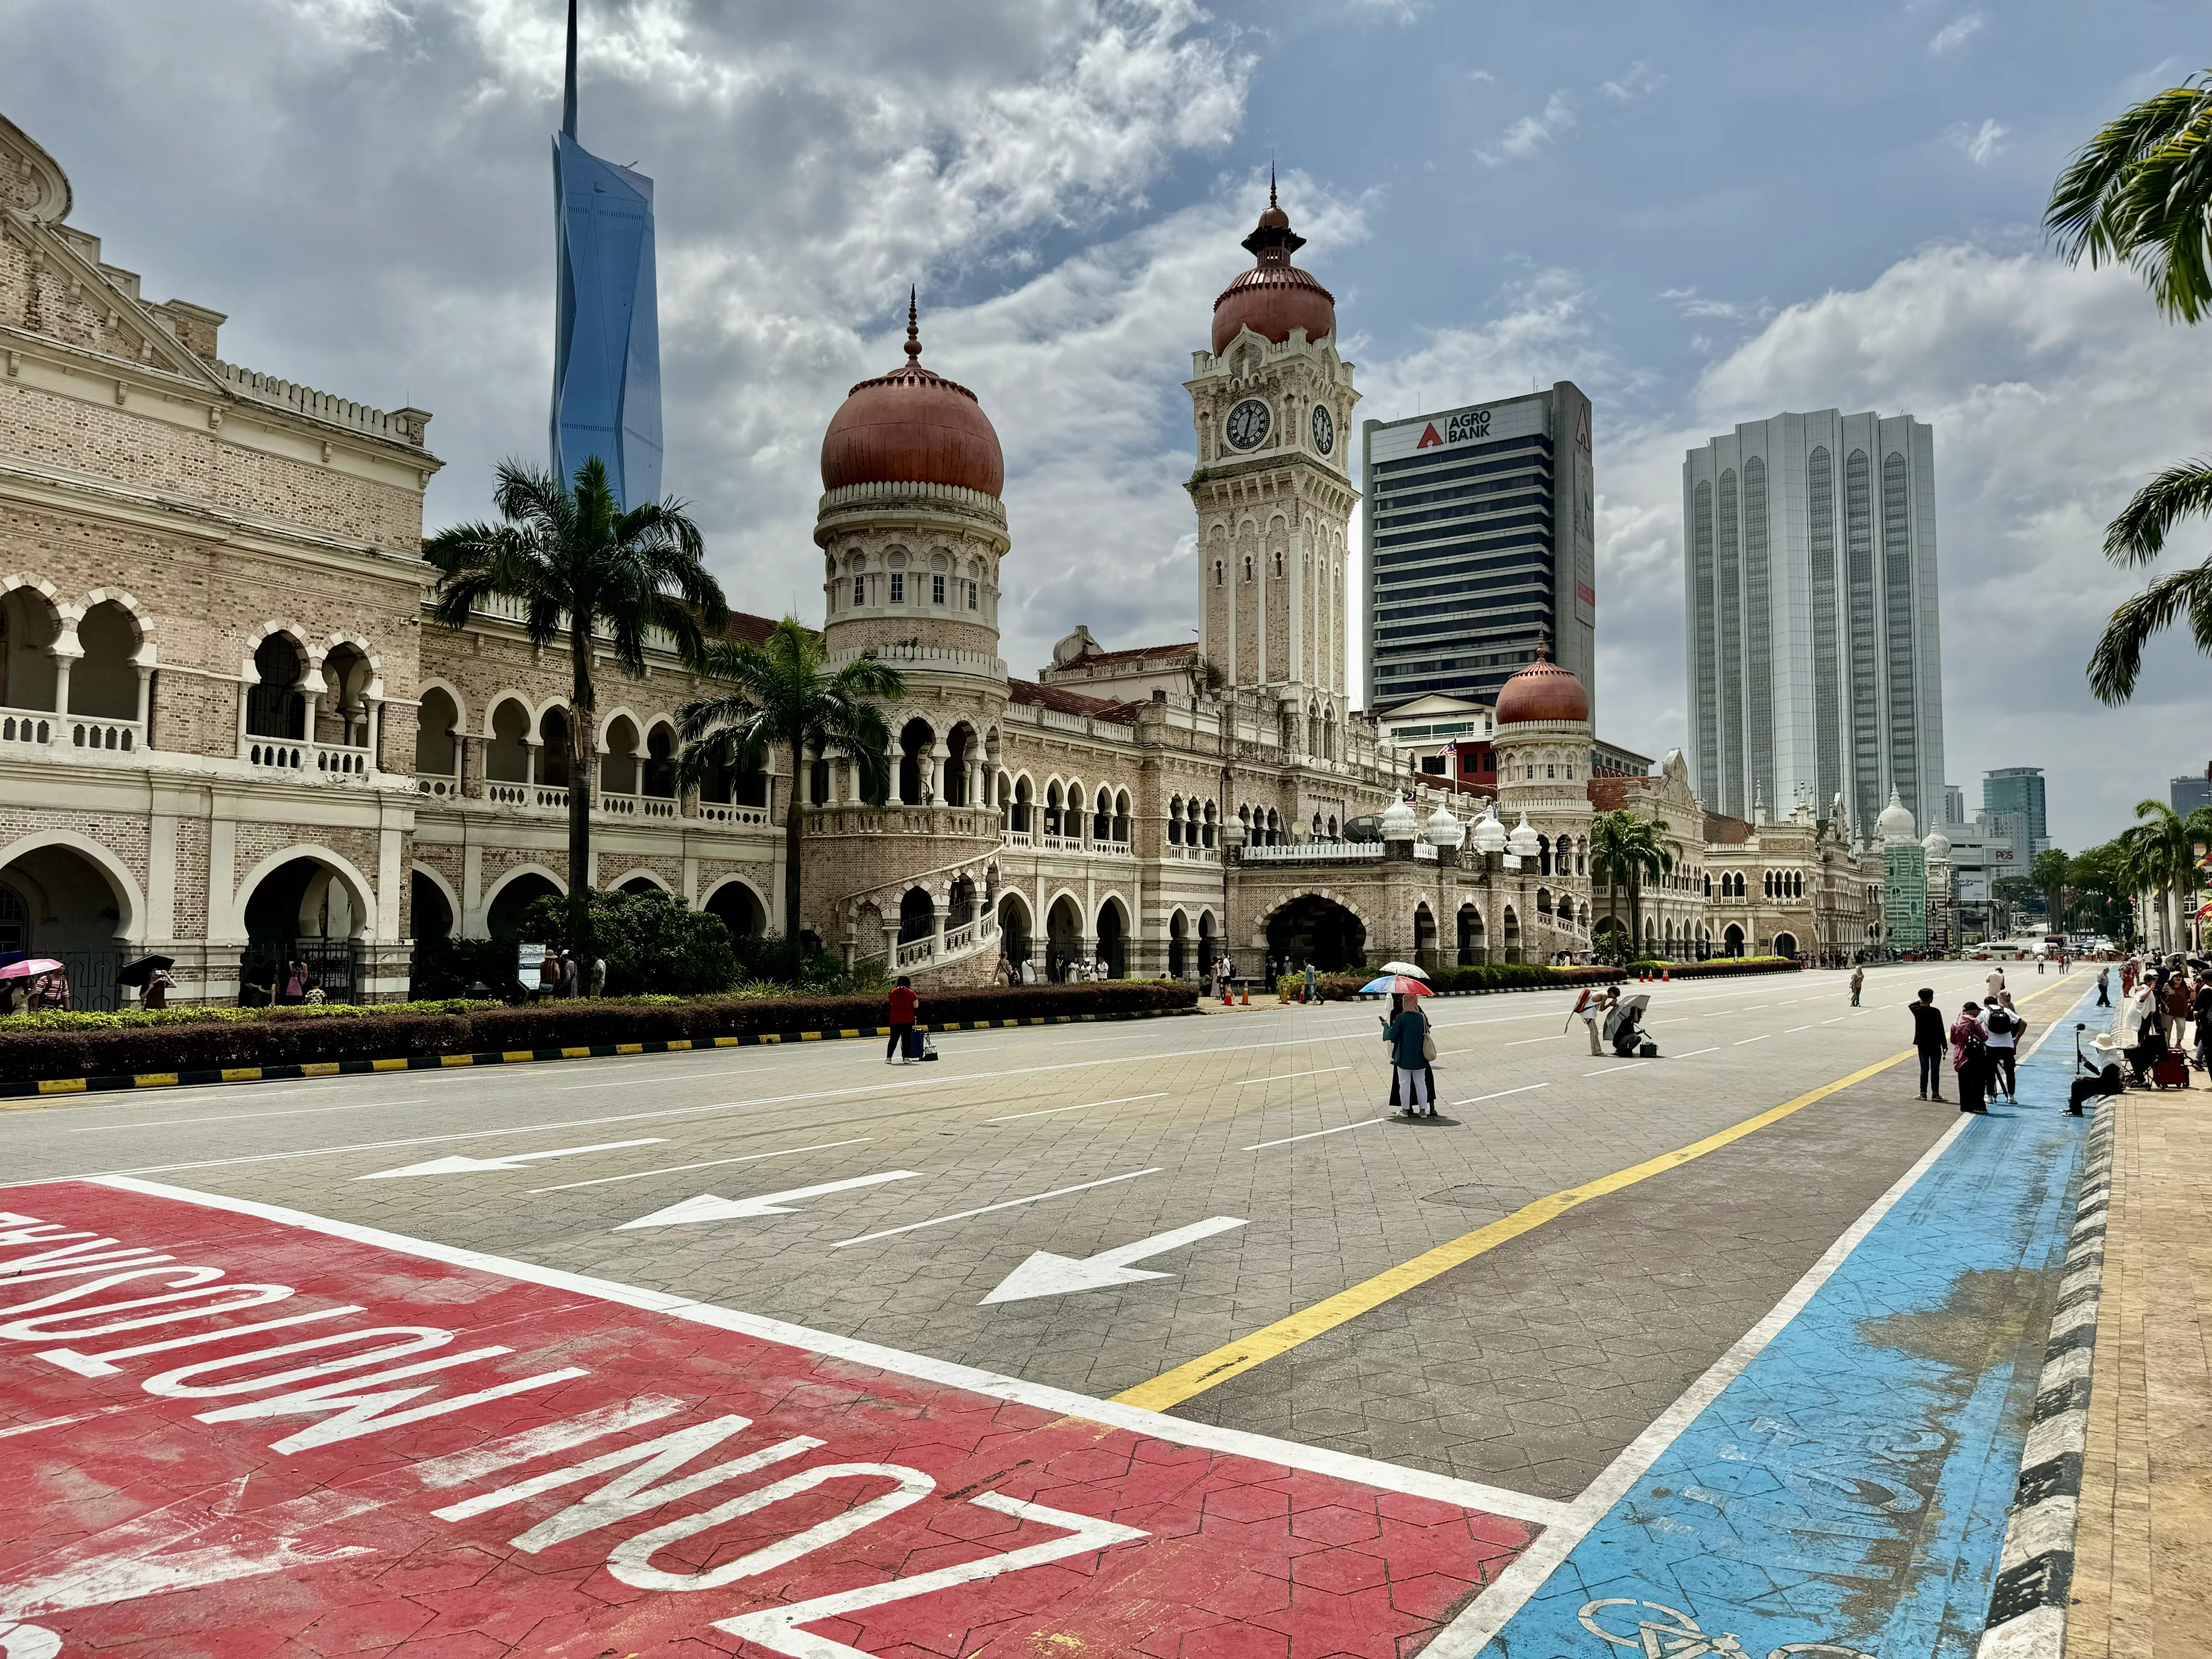 Merdeka Square with the Bangunan Sultan Abdul Samad buildin